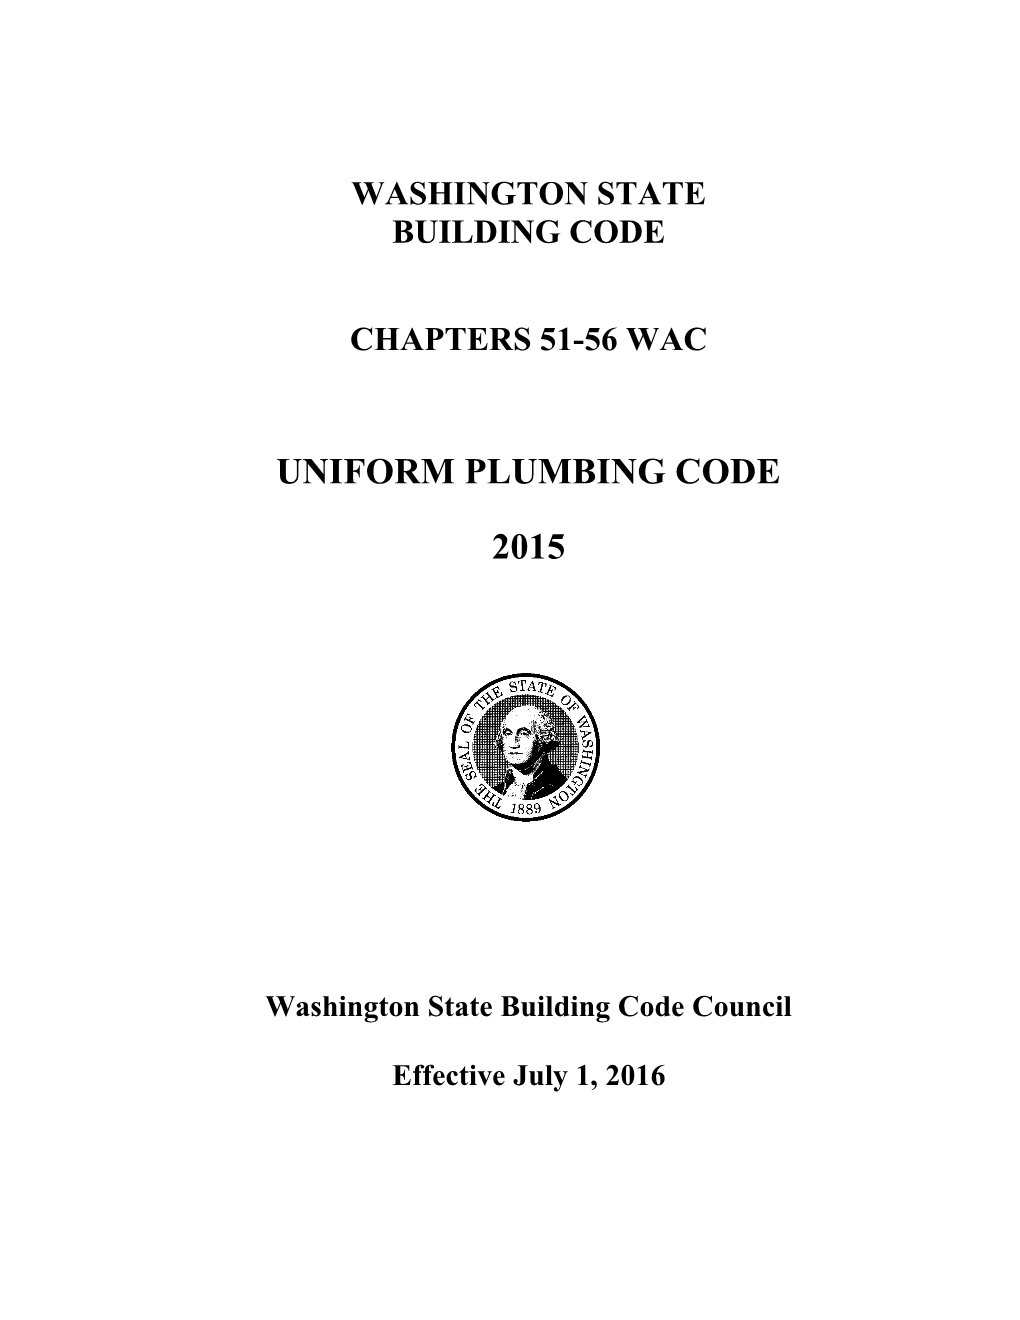 2015 Uniform Plumbing Code (UPC)